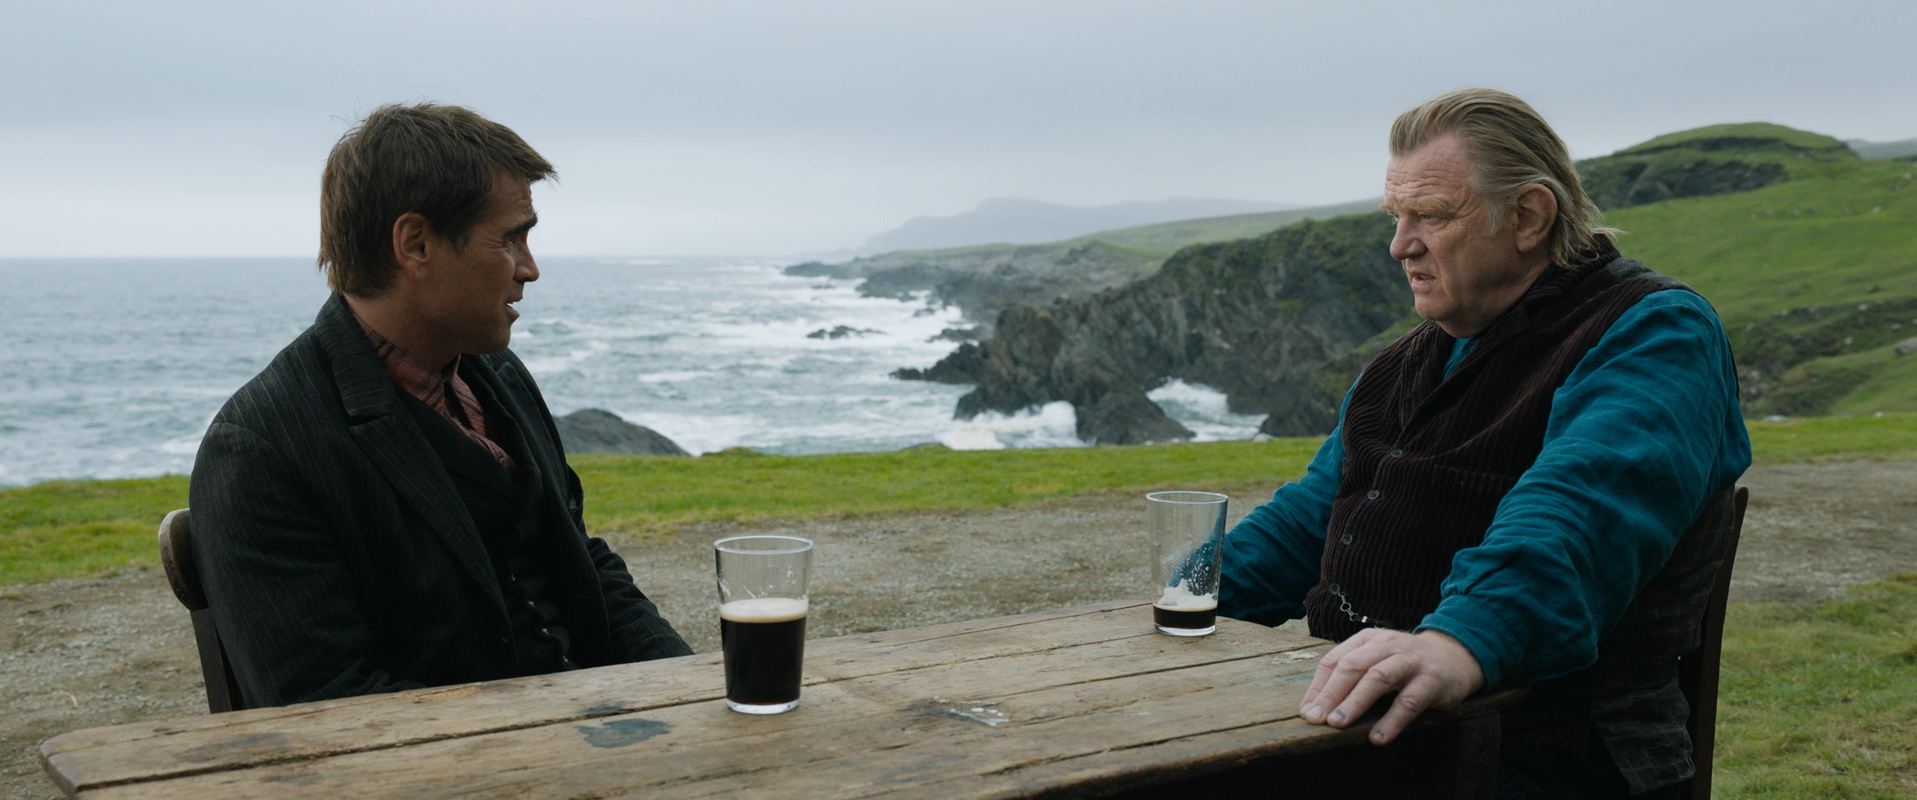 Colin Farrell and Brendan Gleeson in "Banshees of Inisherin" HIFF 2022 film